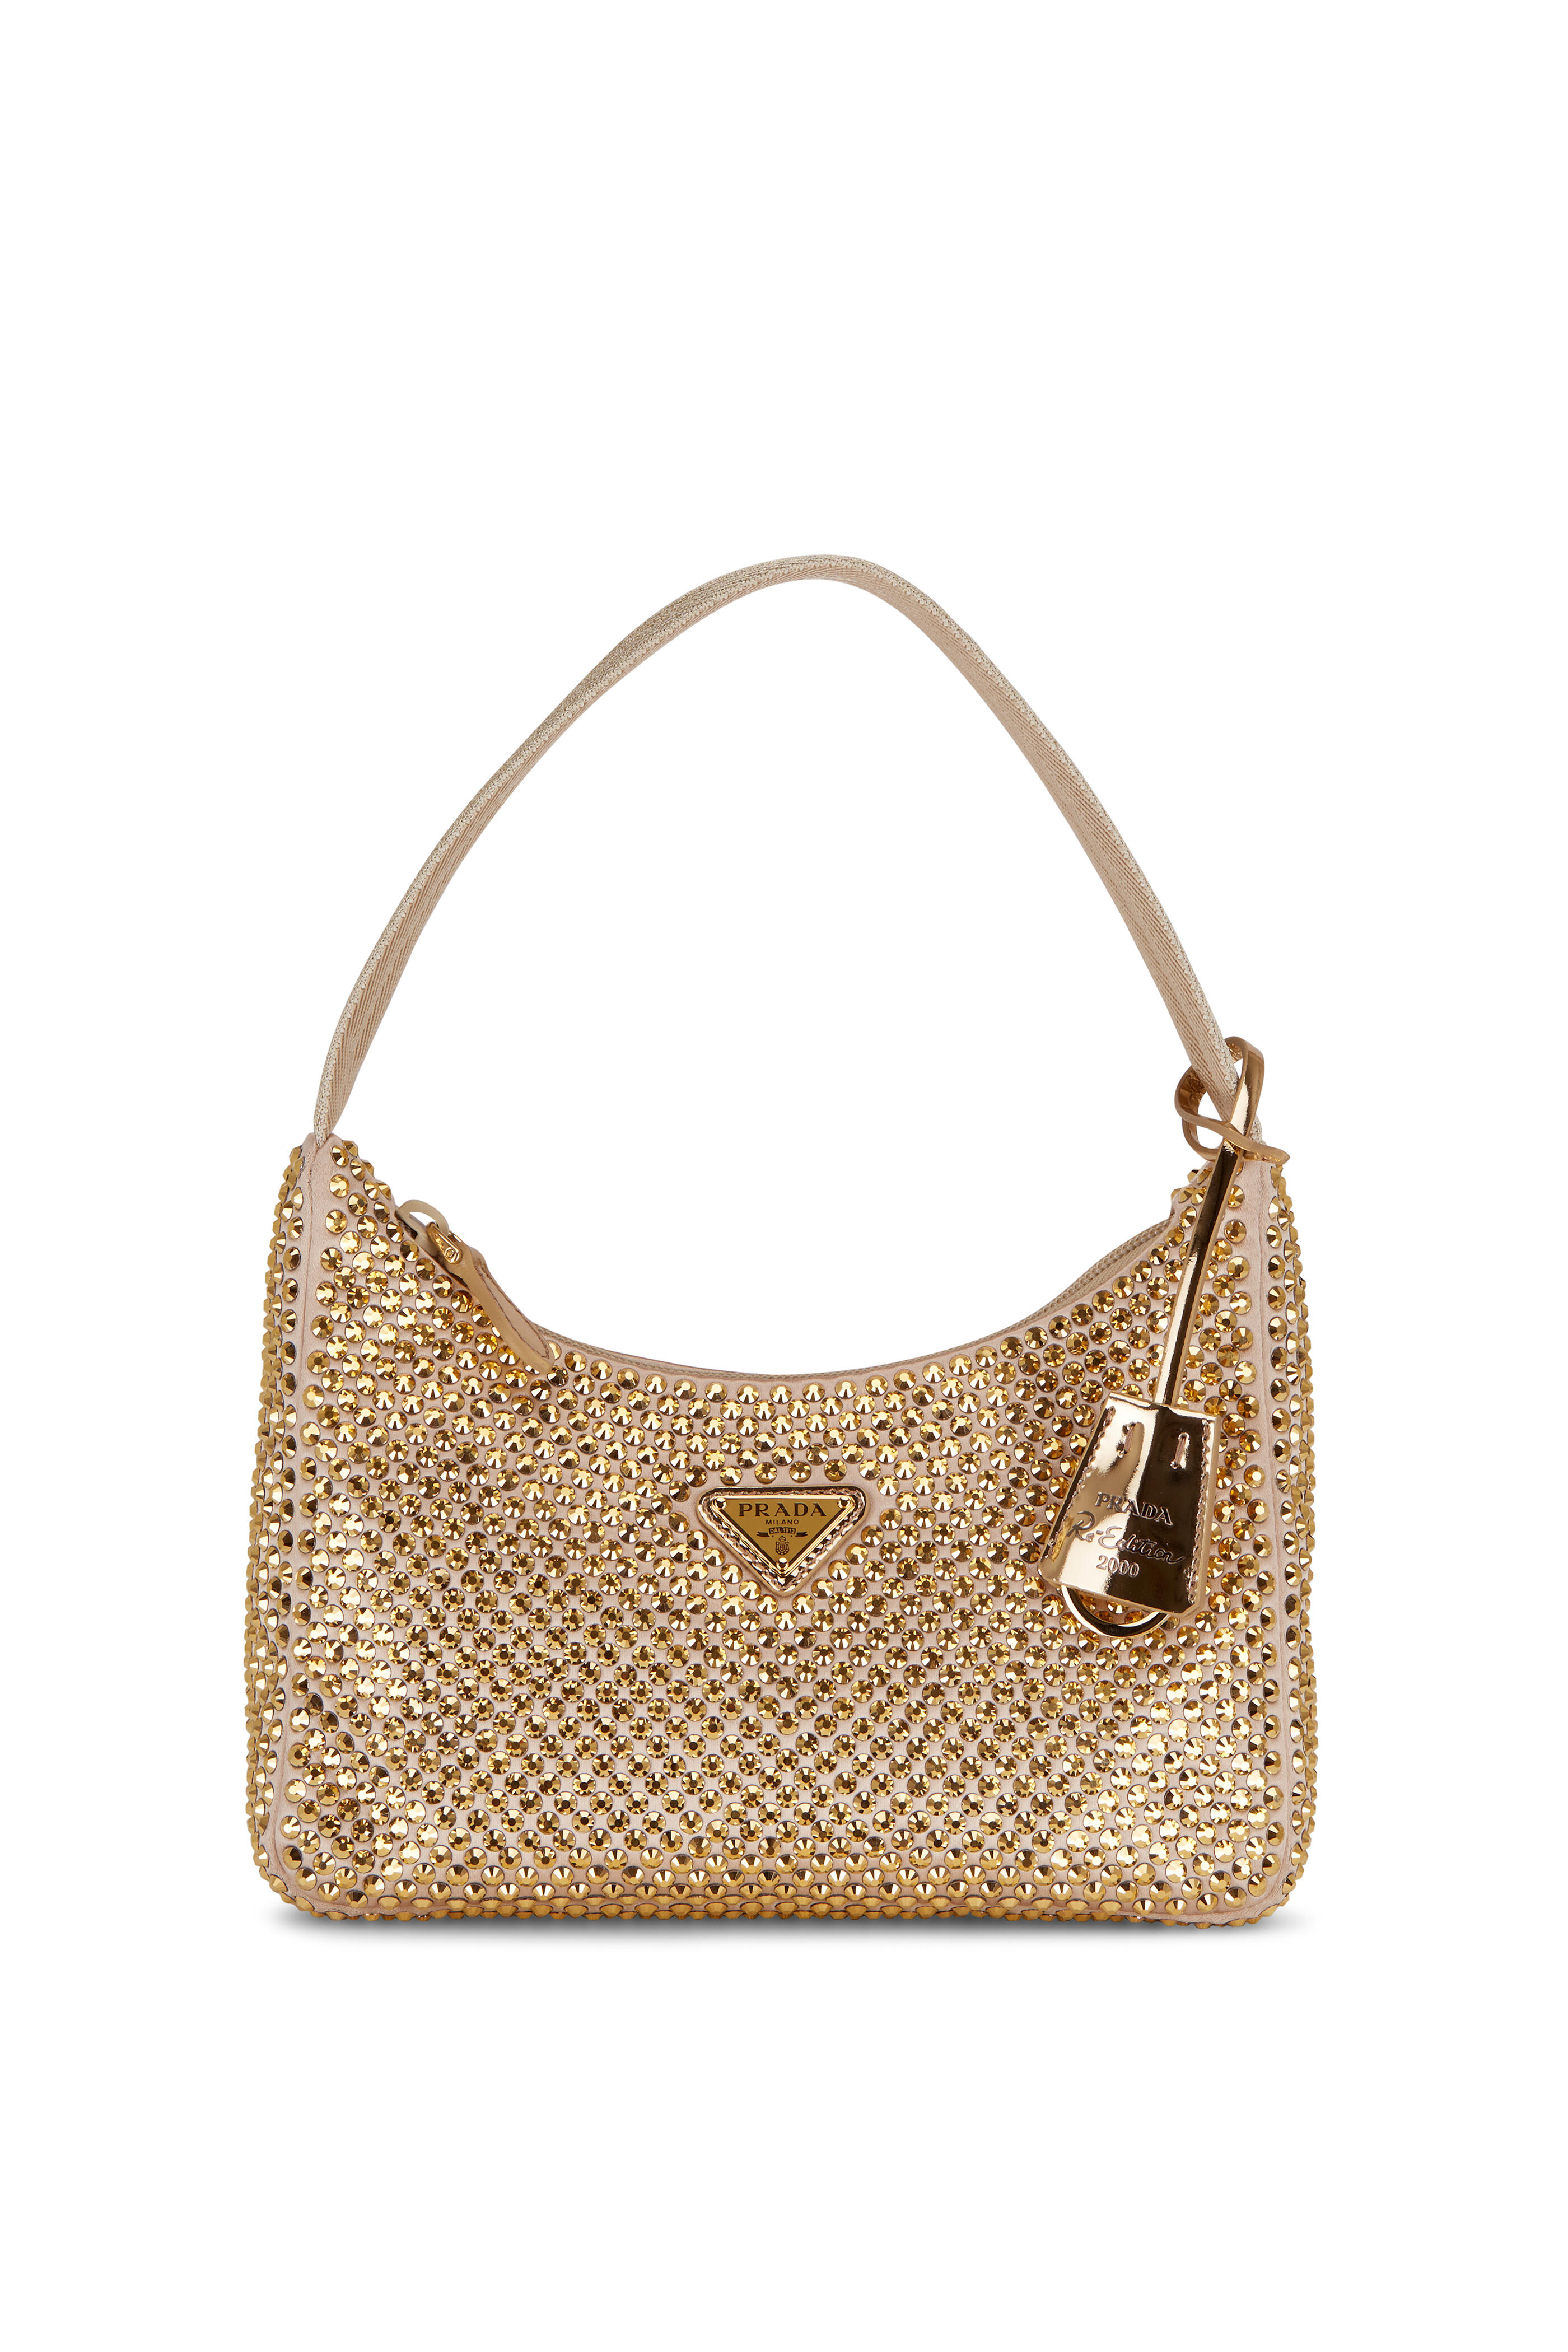 Prada - Platinum Gold Satin Crystal Mini Shoulder Bag